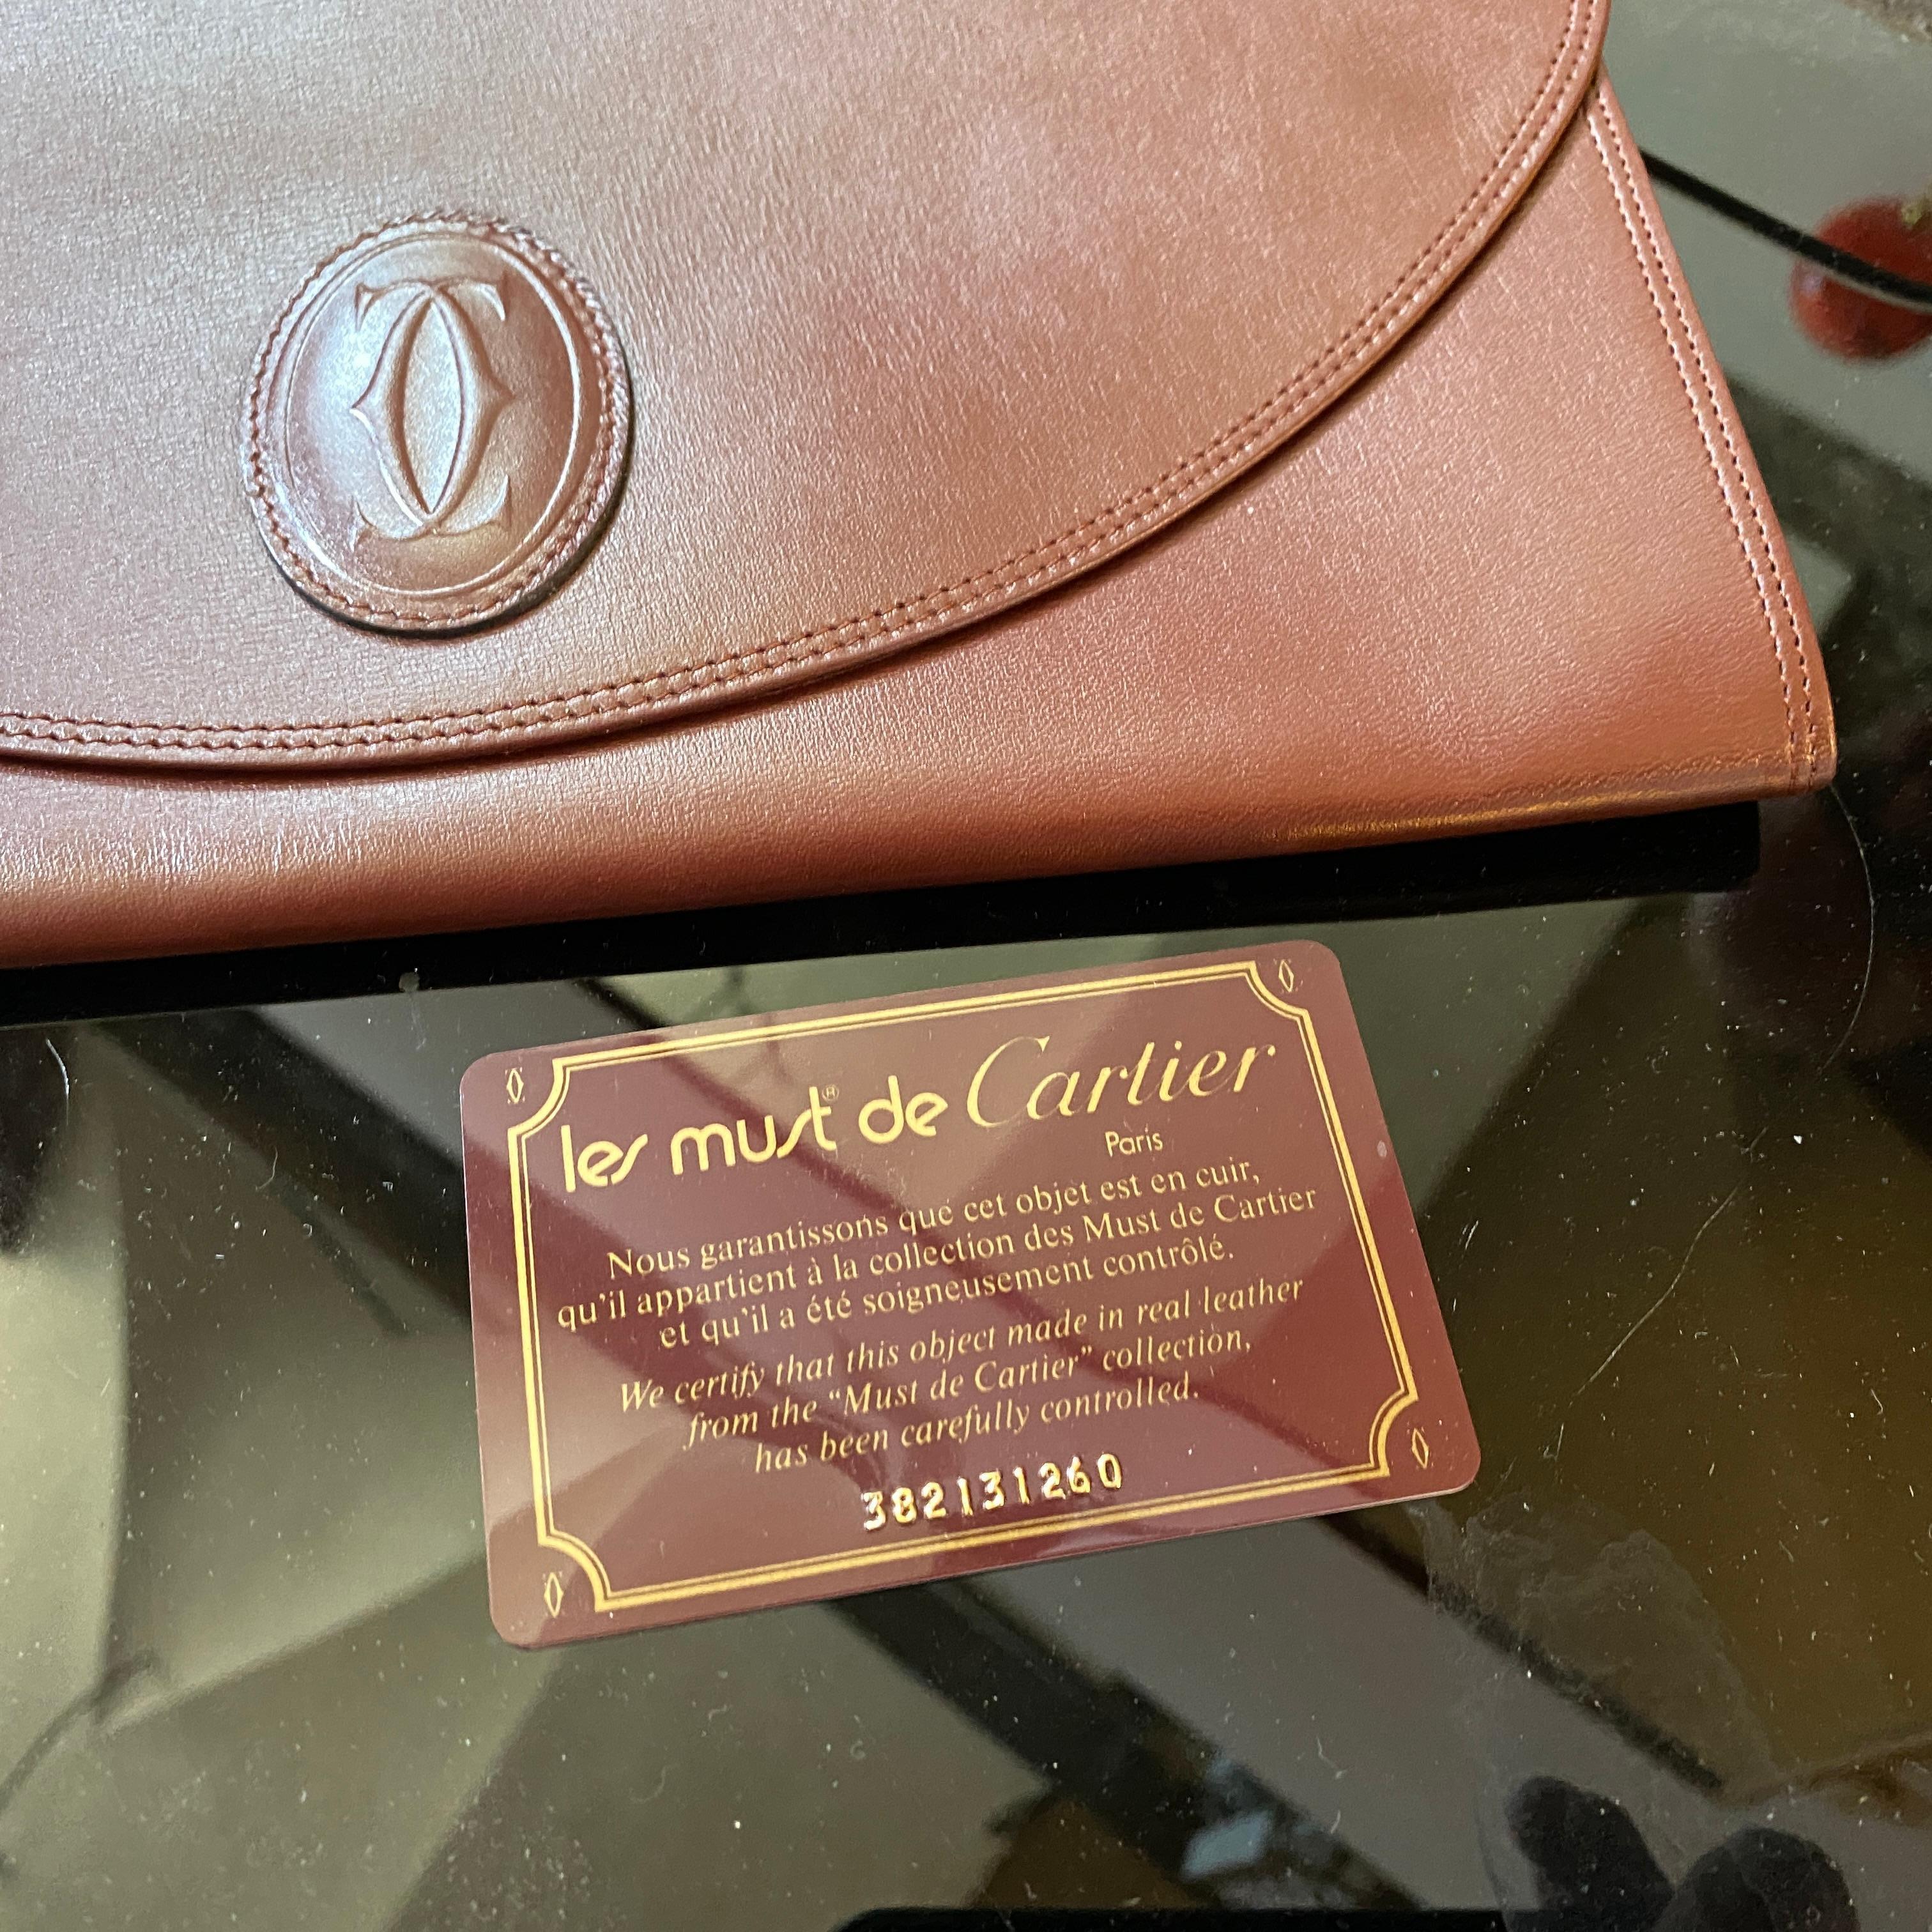 A perfect condition Cartier leather clutch bag, mini document purse with Cartier logo motif. Rare 